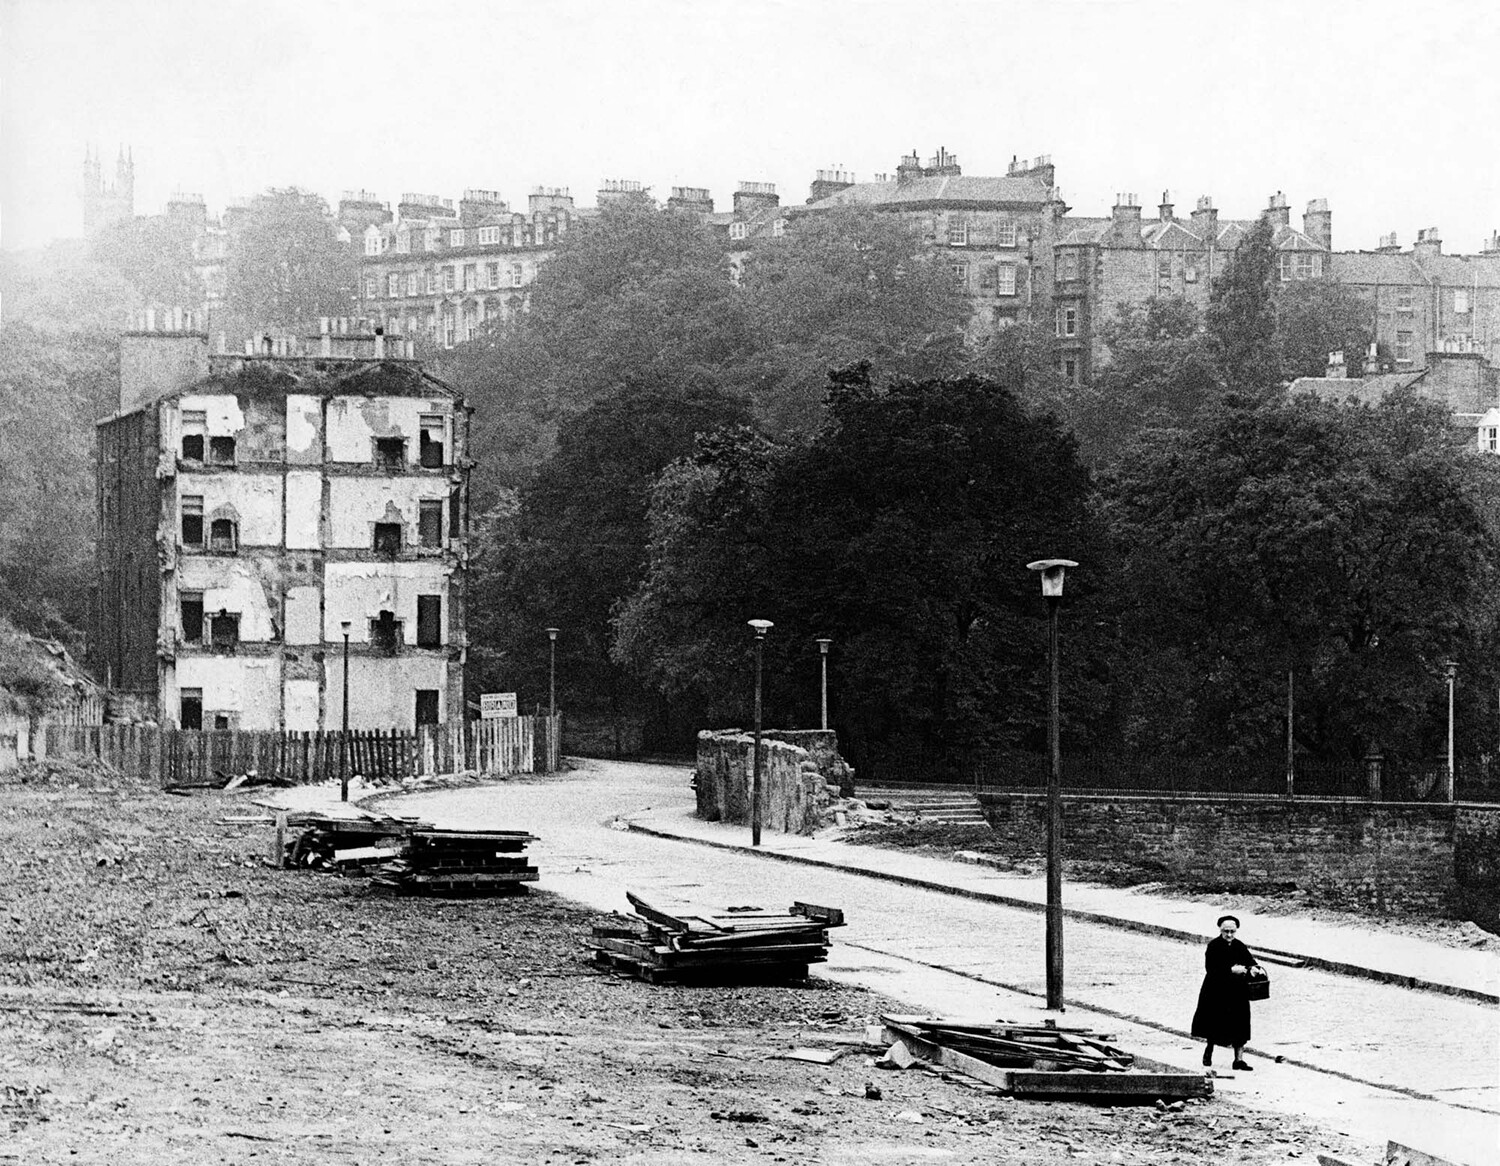 Снос зданий, Стокбридж, Эдинбург, 1966. Фотограф Роберт Бломфилд